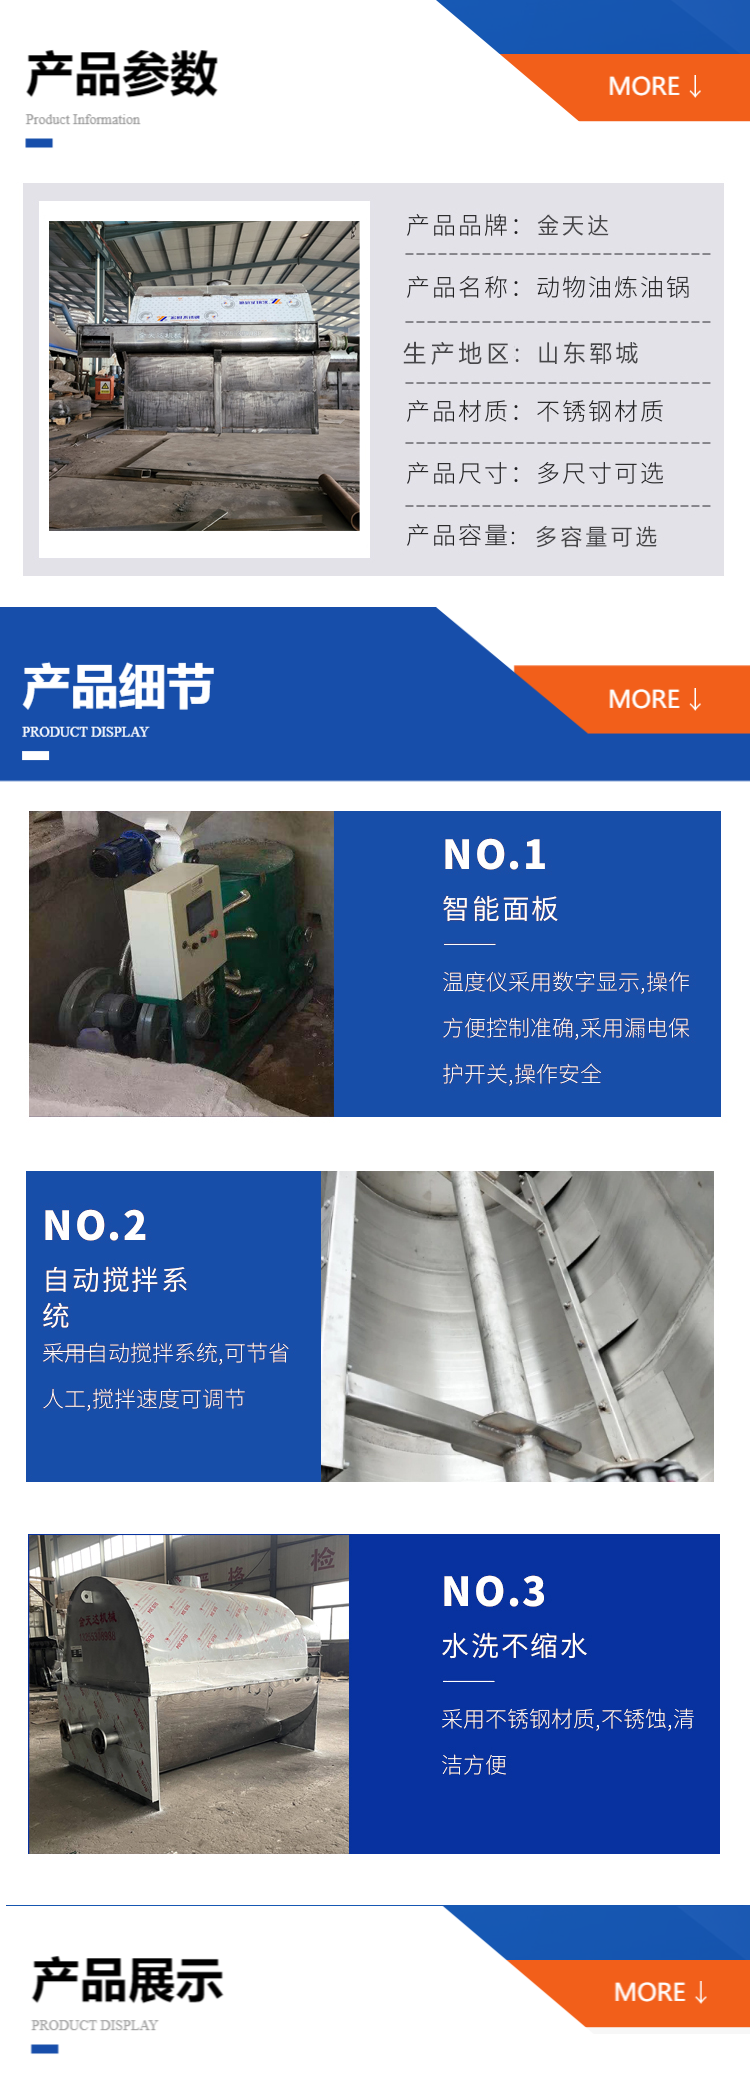 Material of 3-ton boiler plate for thermal oil refining equipment - Long service life Jintianda